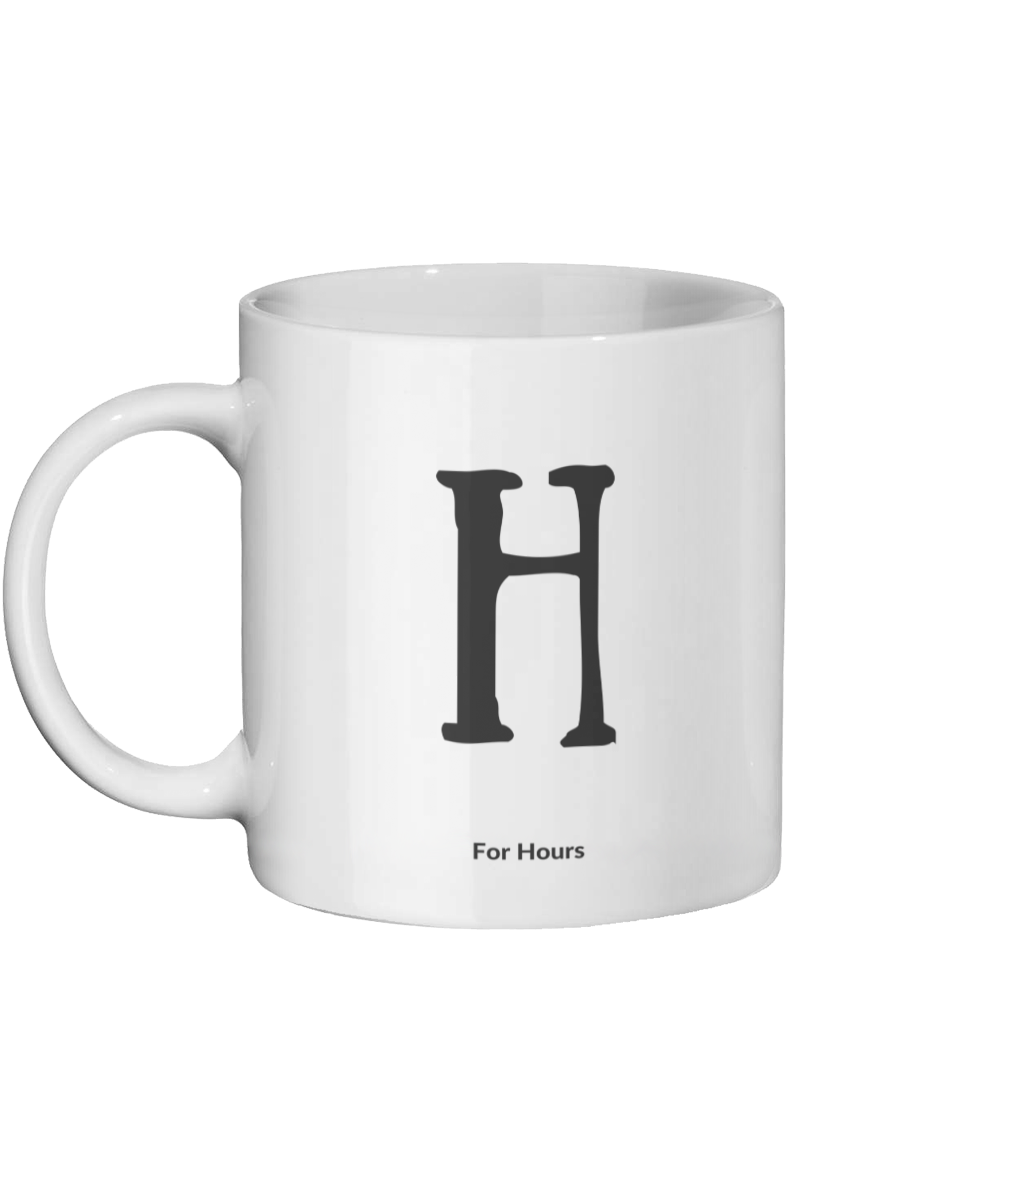 H for Hours Mug Left-side